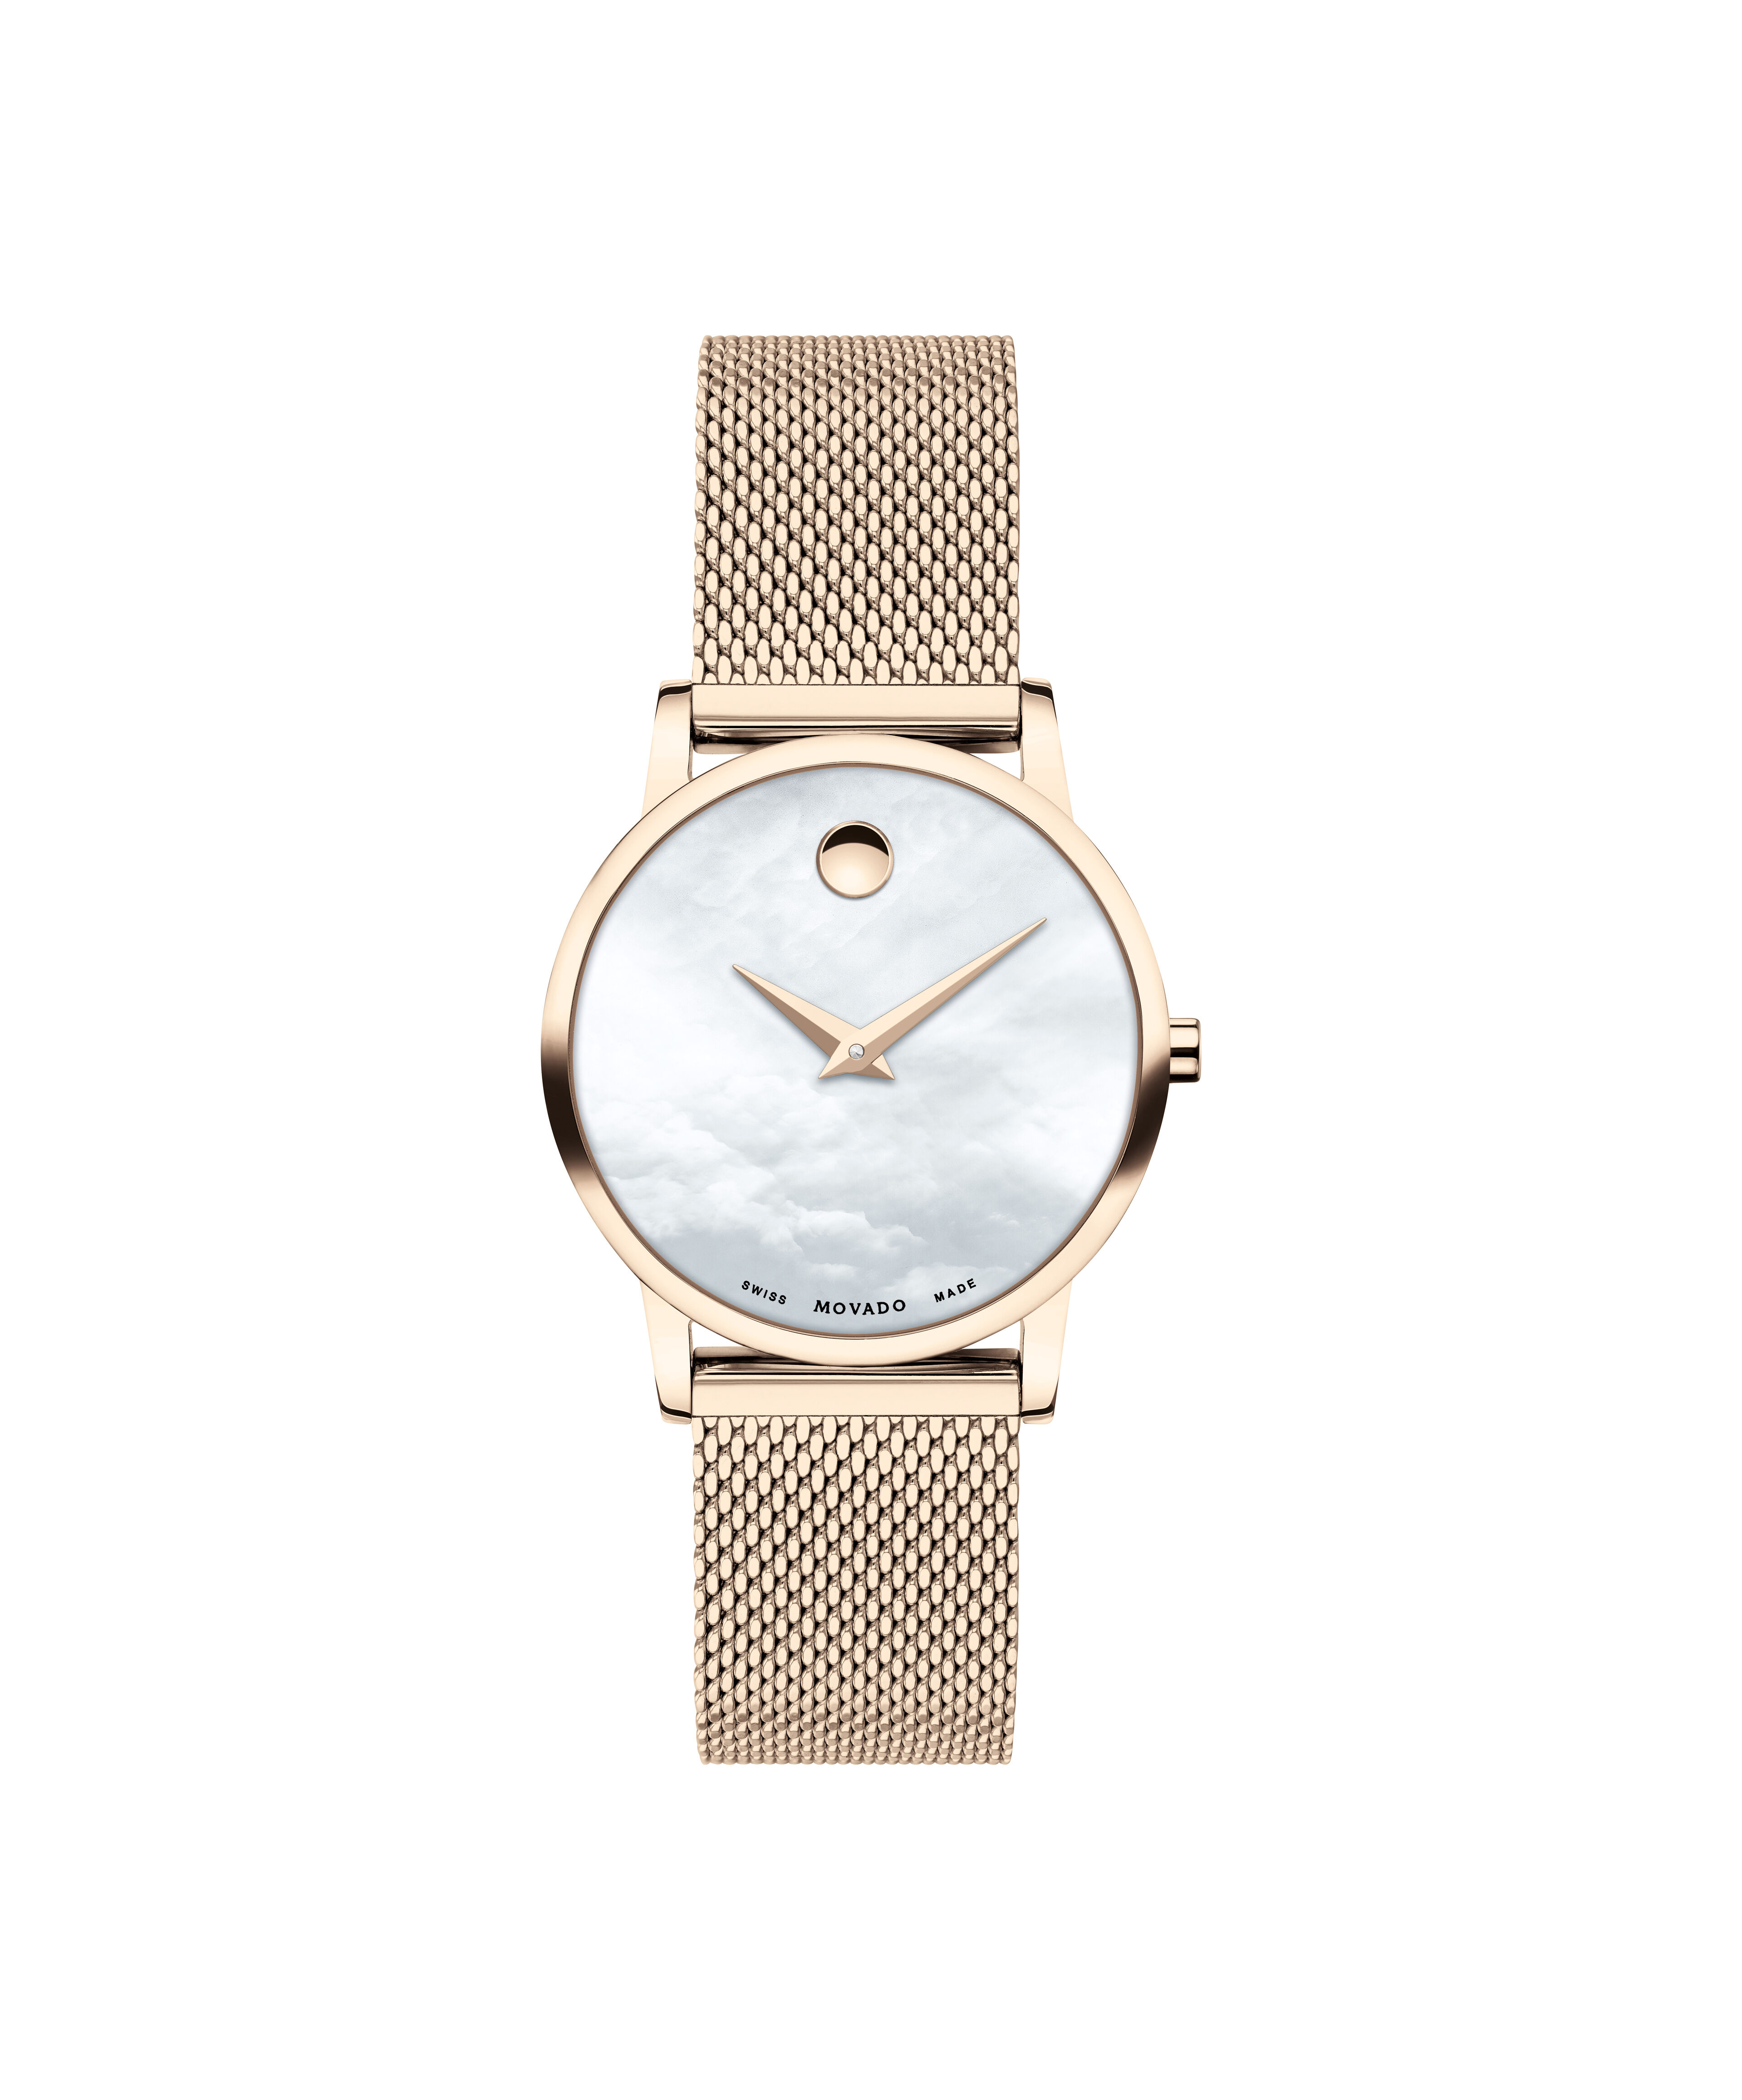 Movado Art Deco 18karat Gold Chronometre Pocket watchMovado Art déco- Années 40